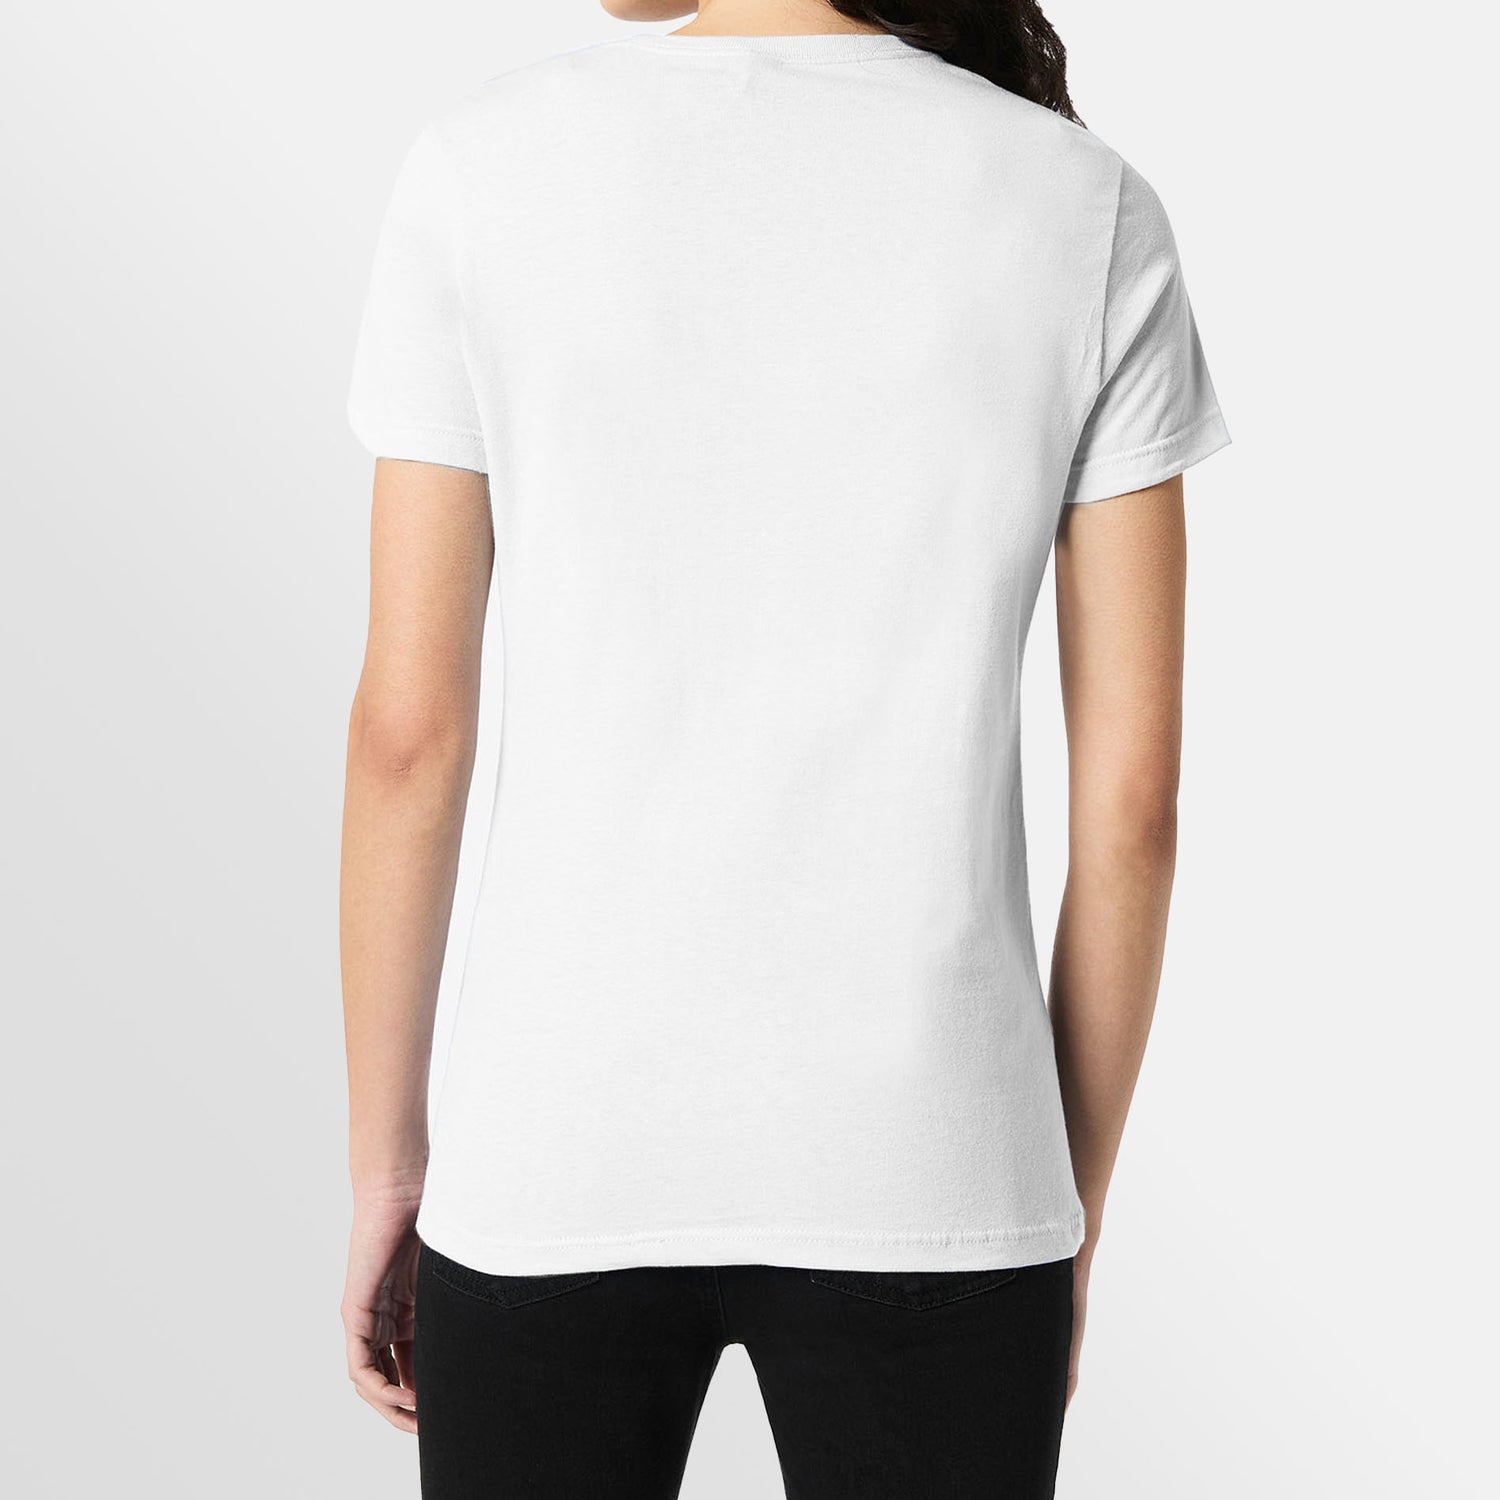 Gildan Women's Softstyle Cotton T-Shirt, 2-Pack Black/White, White